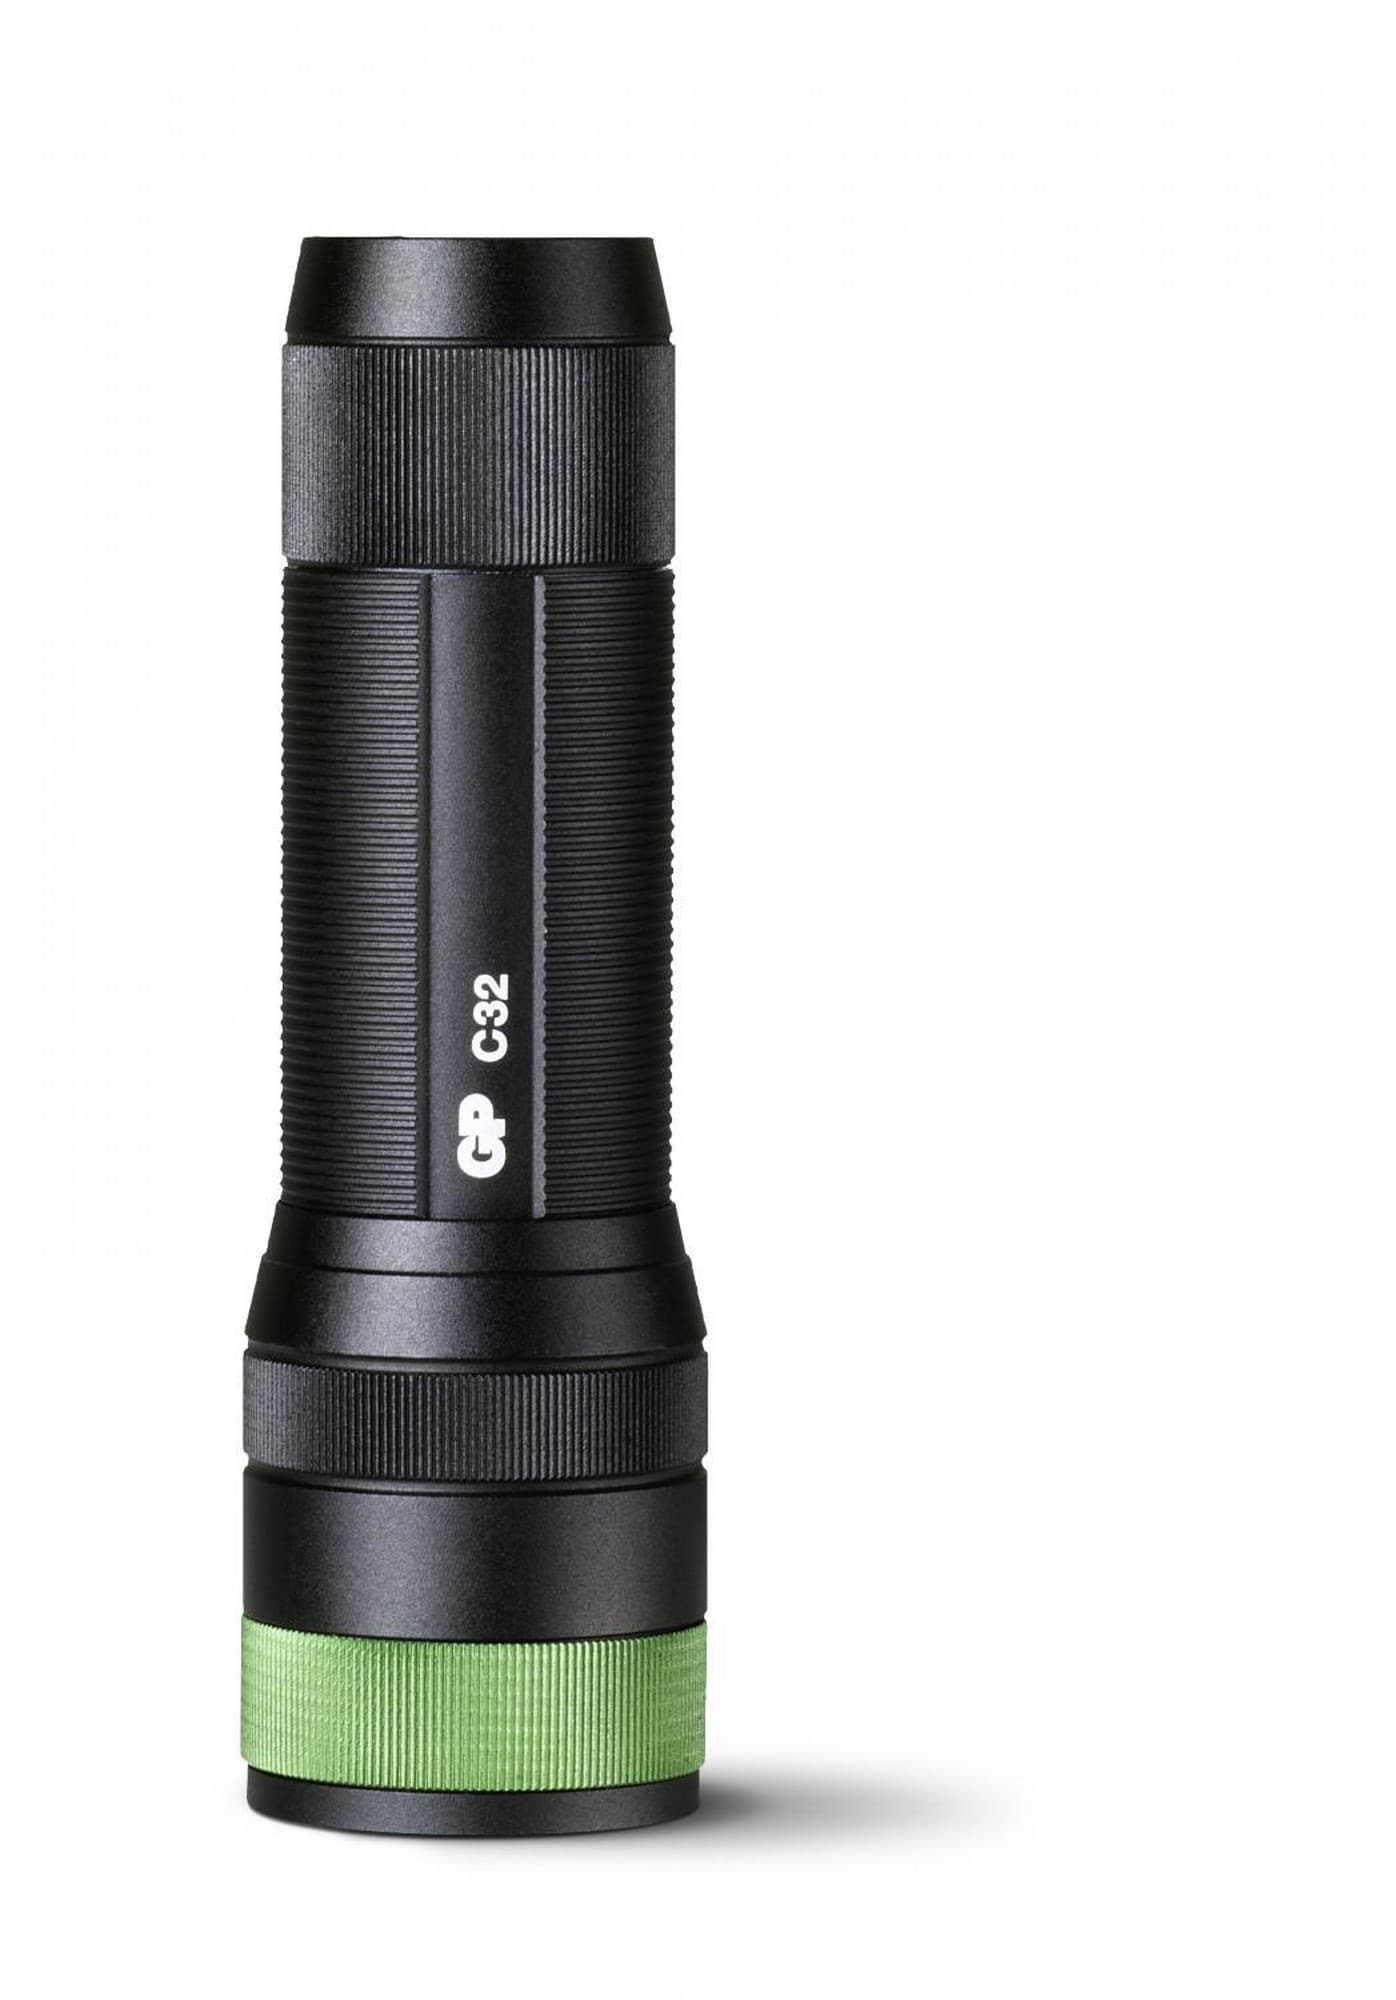 GP Discovery flashlight, Lupus C32